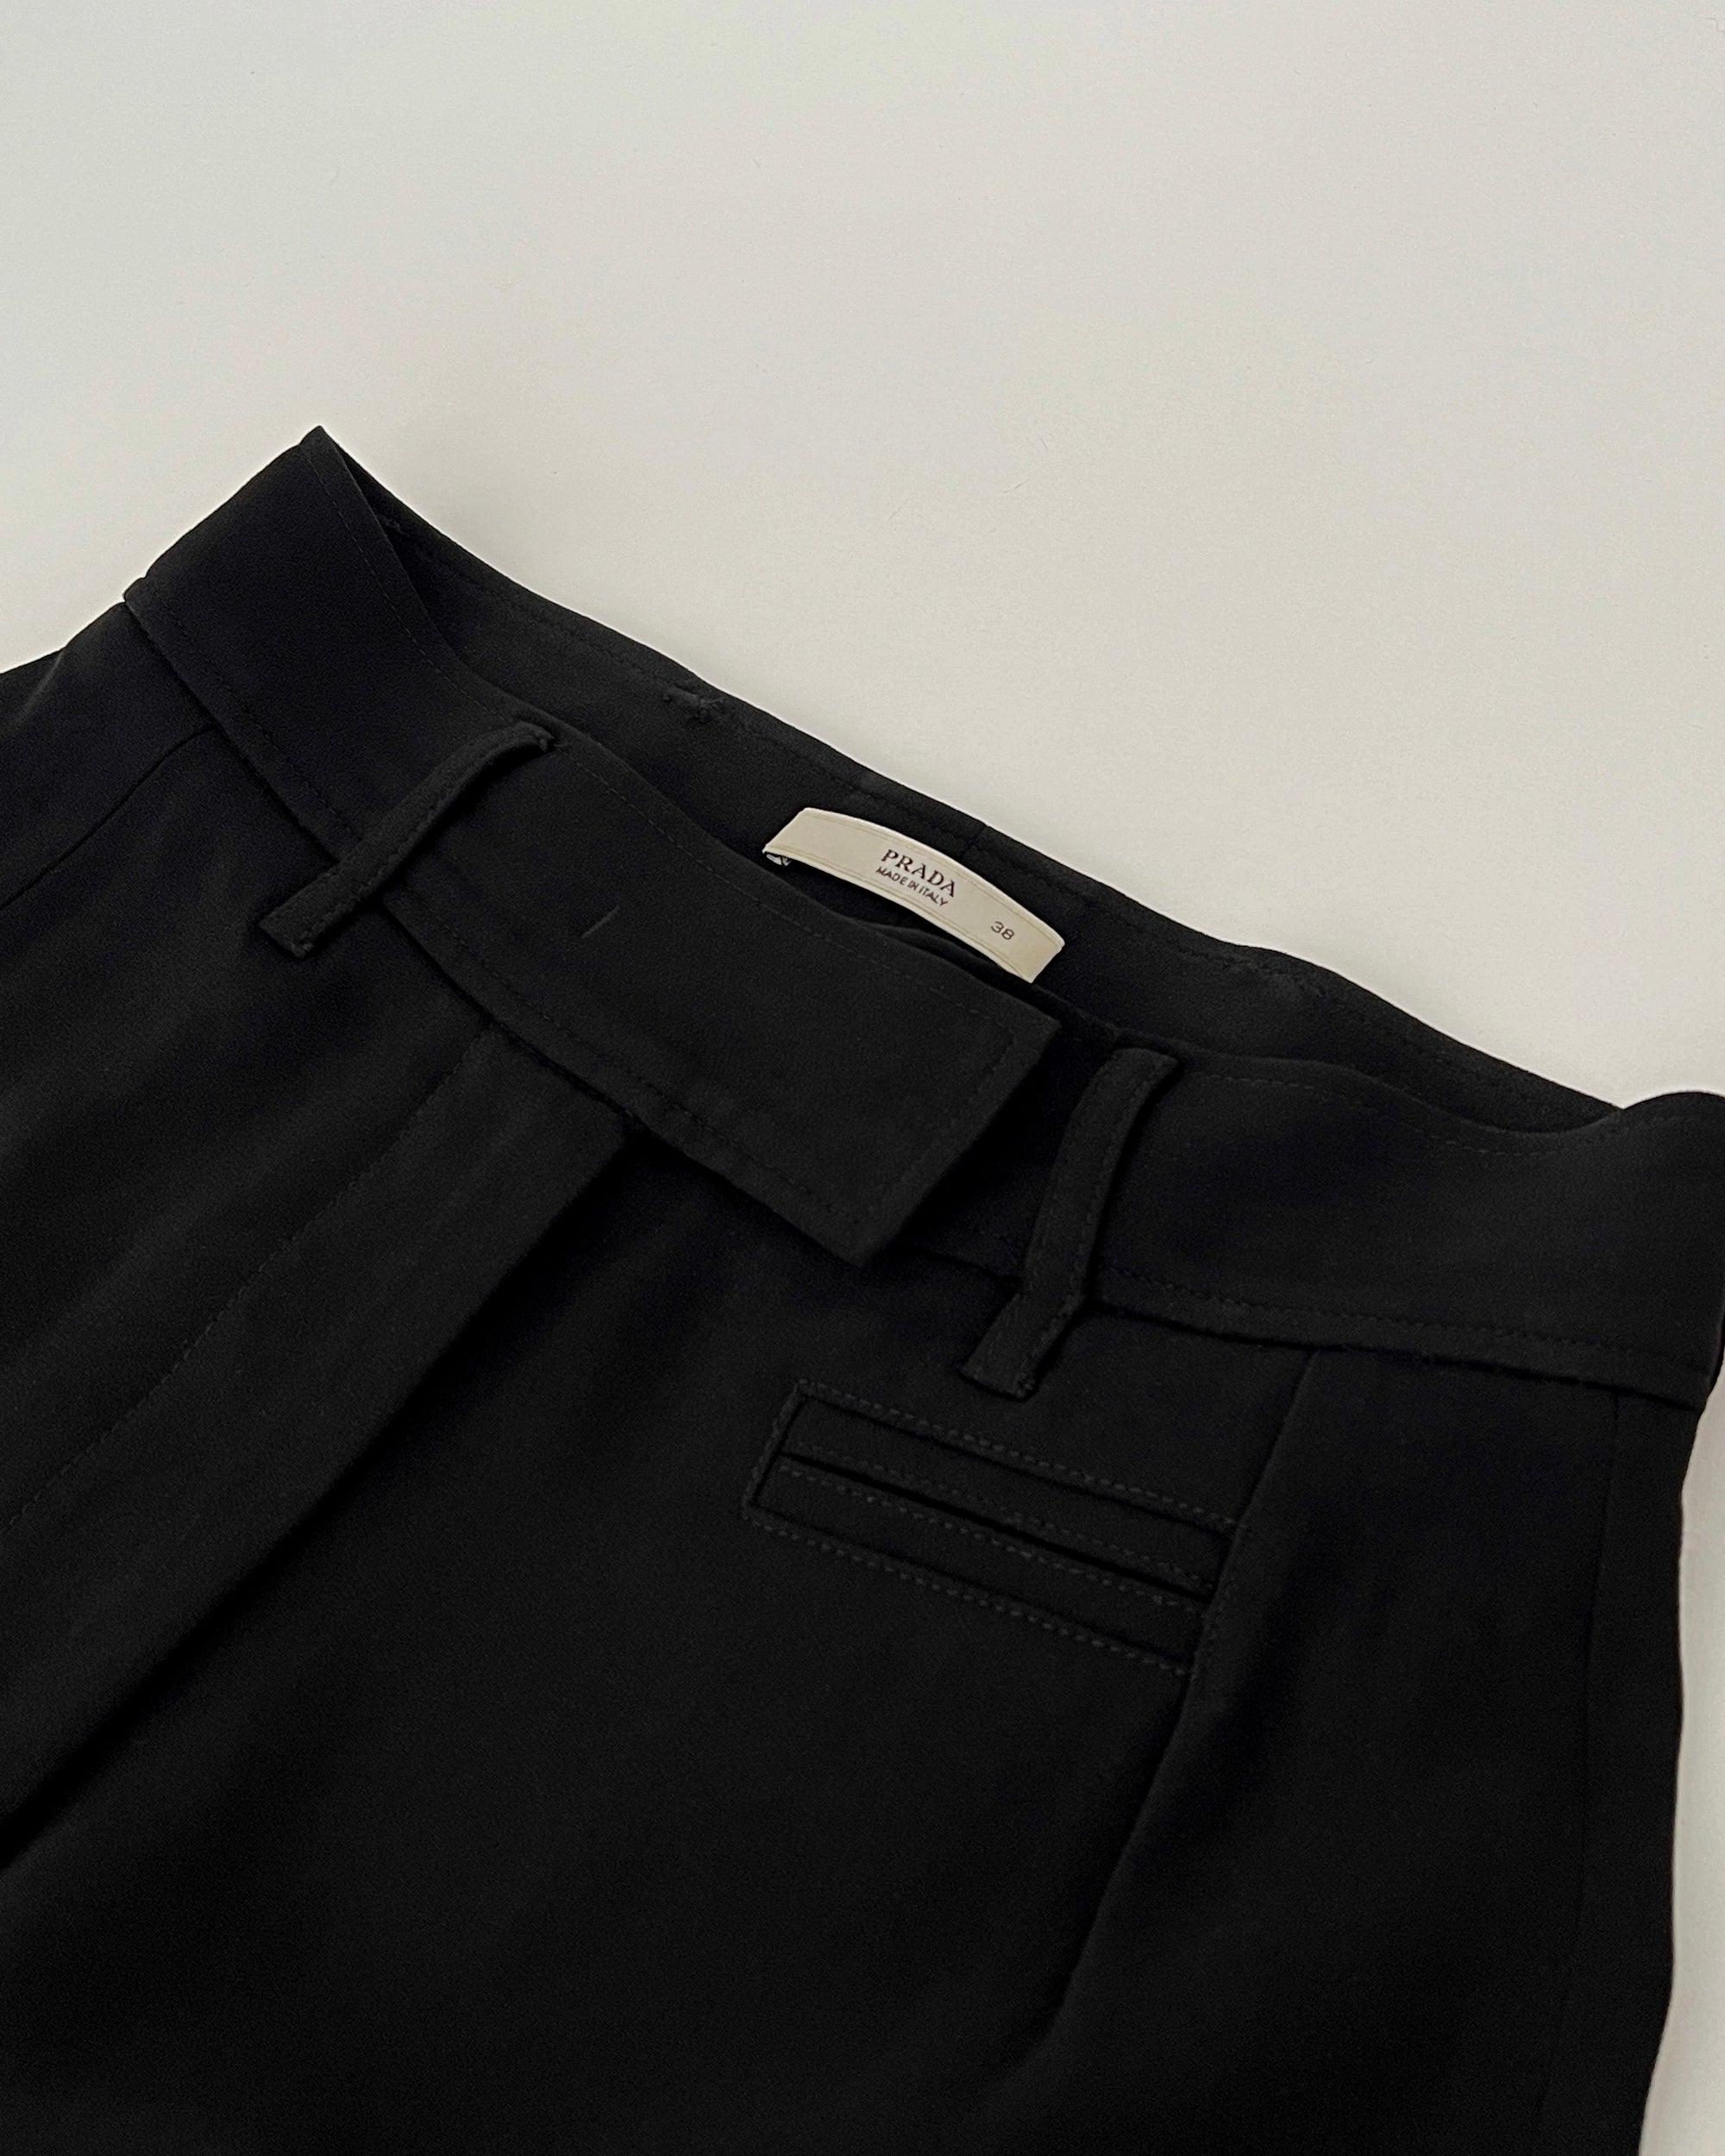 Vintage Prada Black High-Waisted Trousers